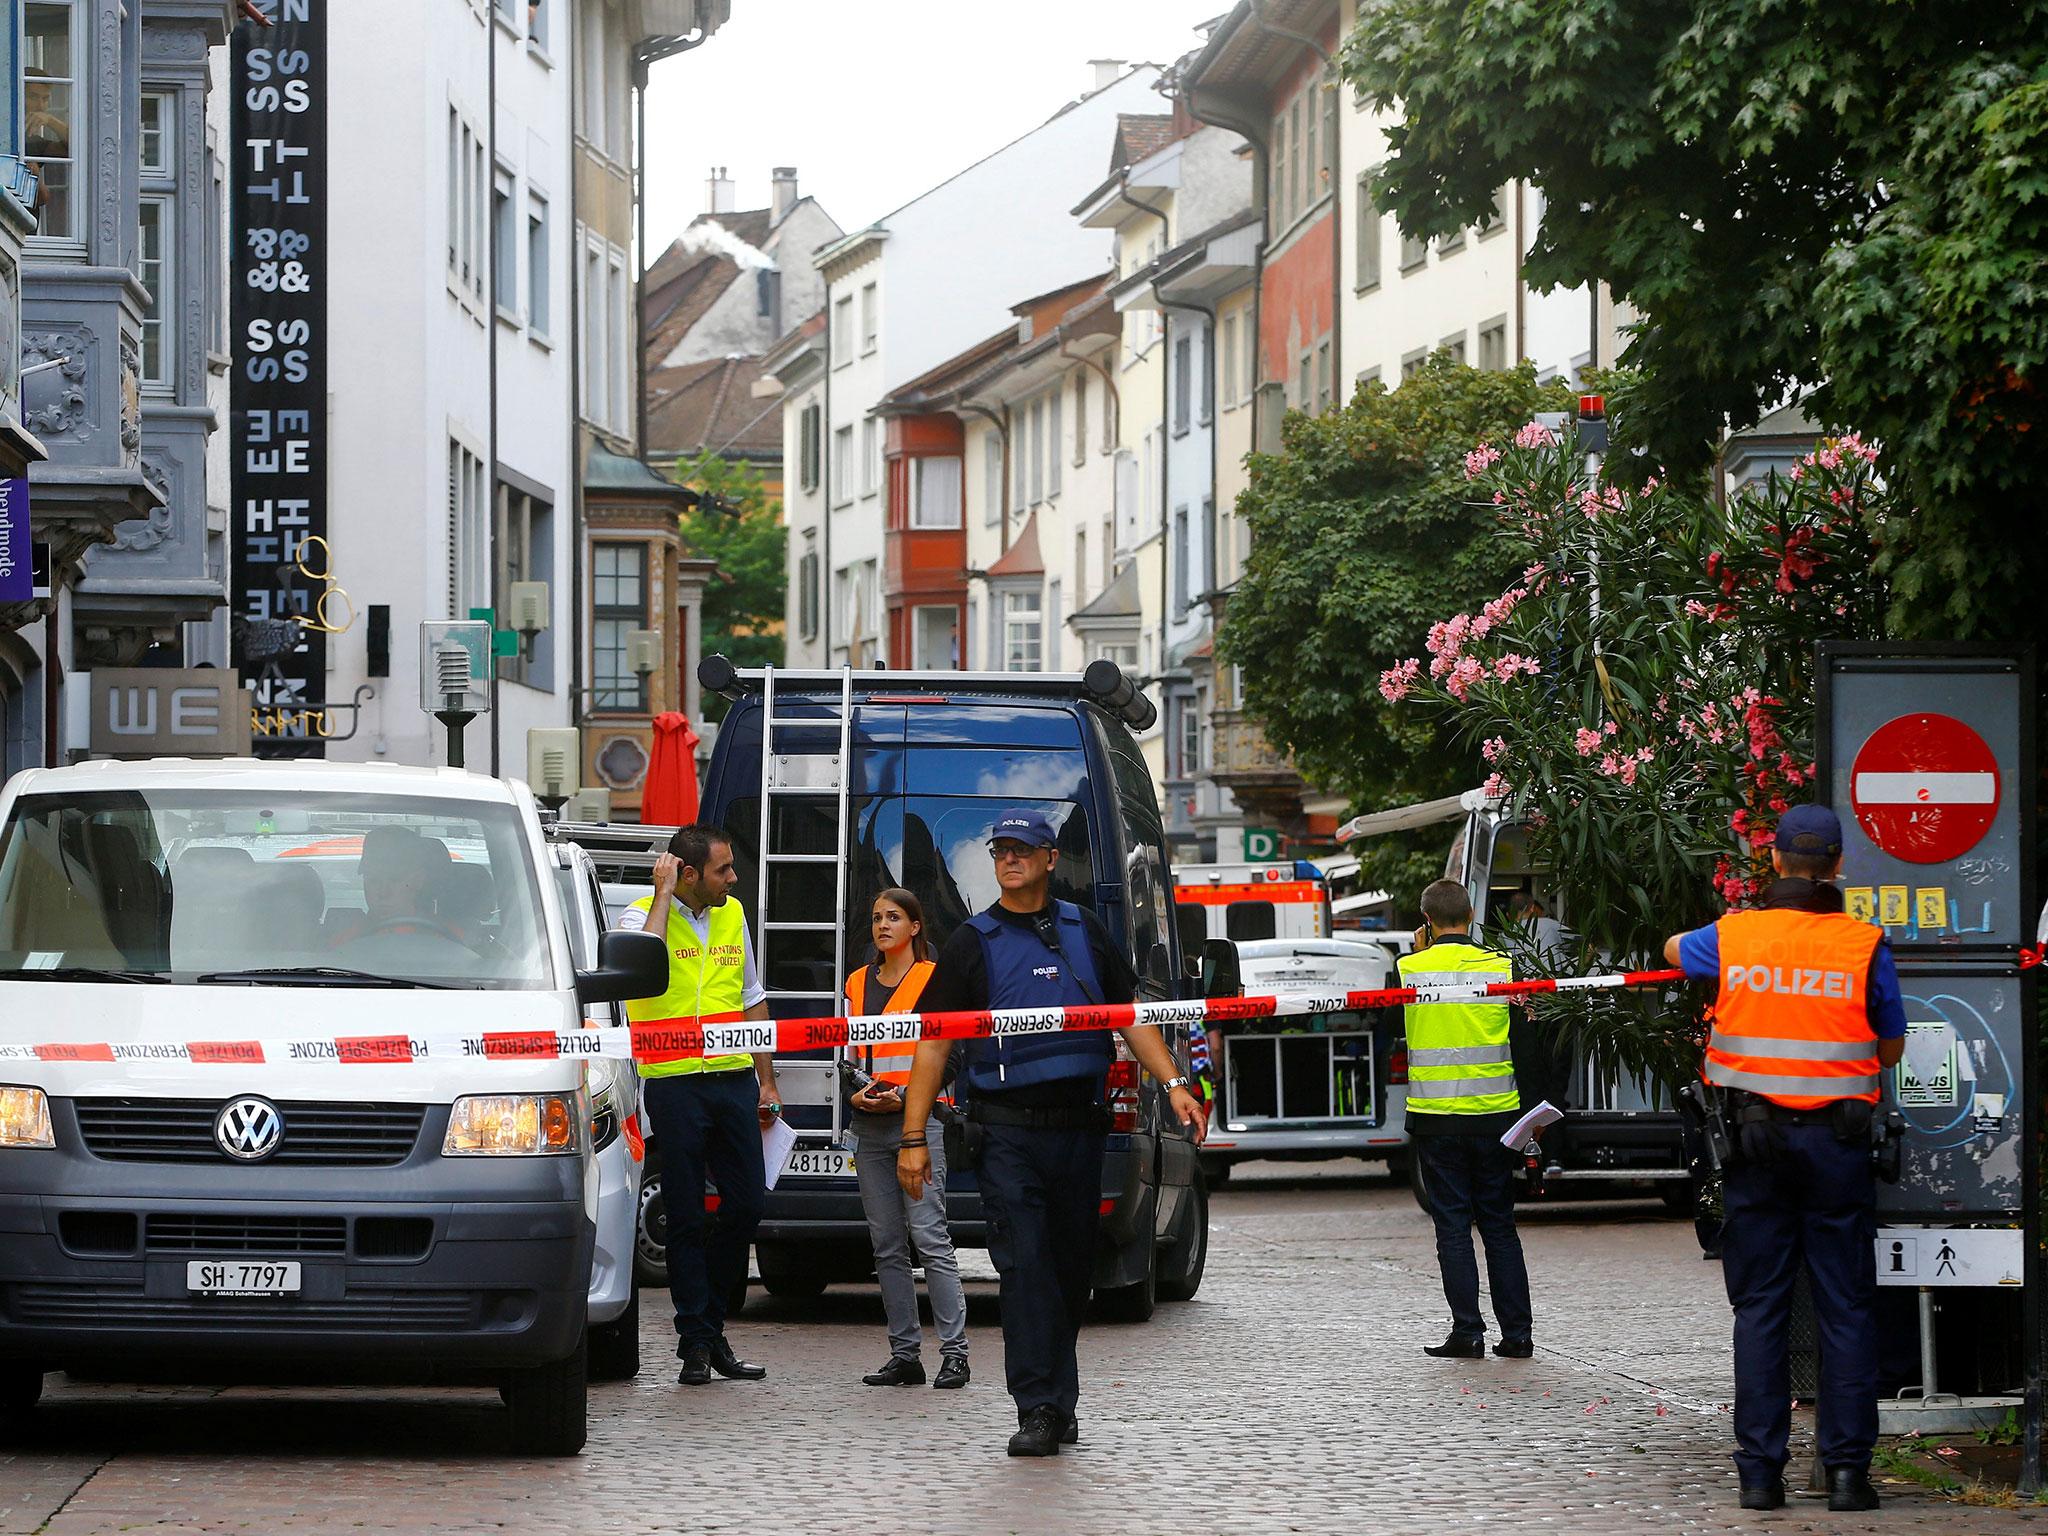 Swiss police officers stand at a crime scene in Schaffhausen, Switzerland